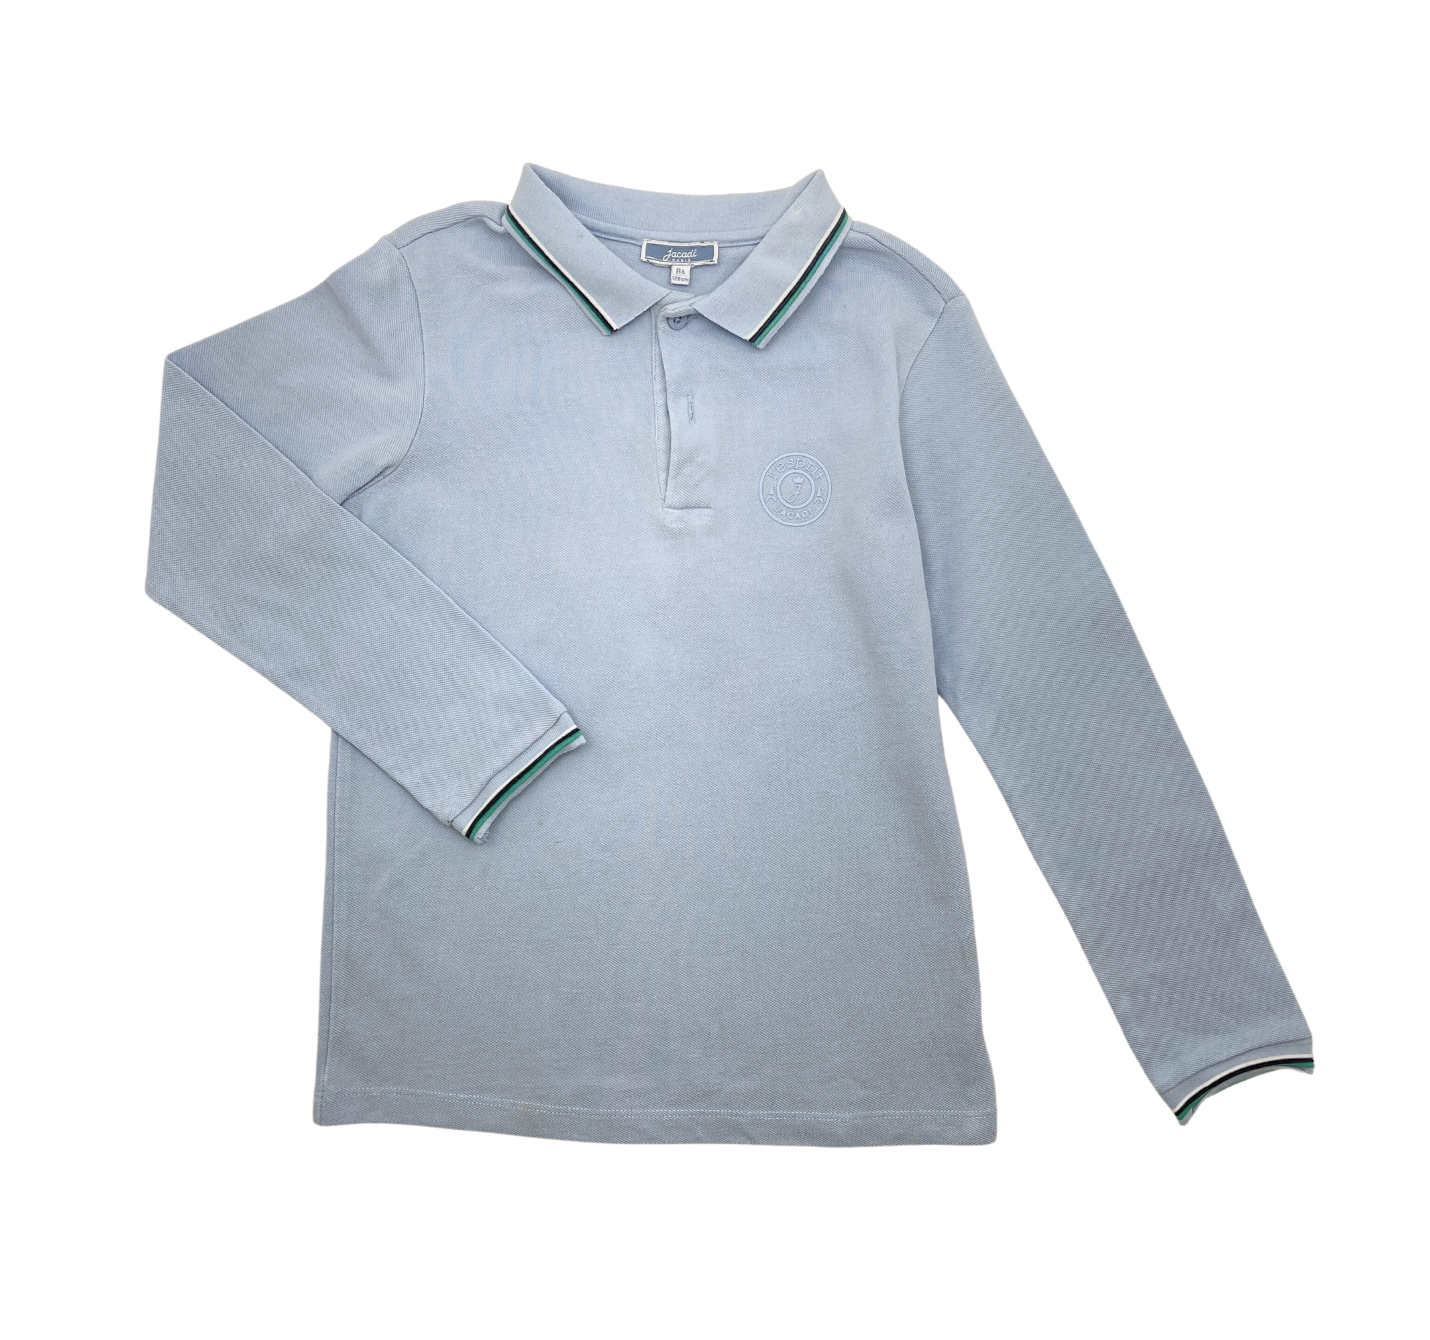 JACADI - Paris blue polo shirt - 8 years old